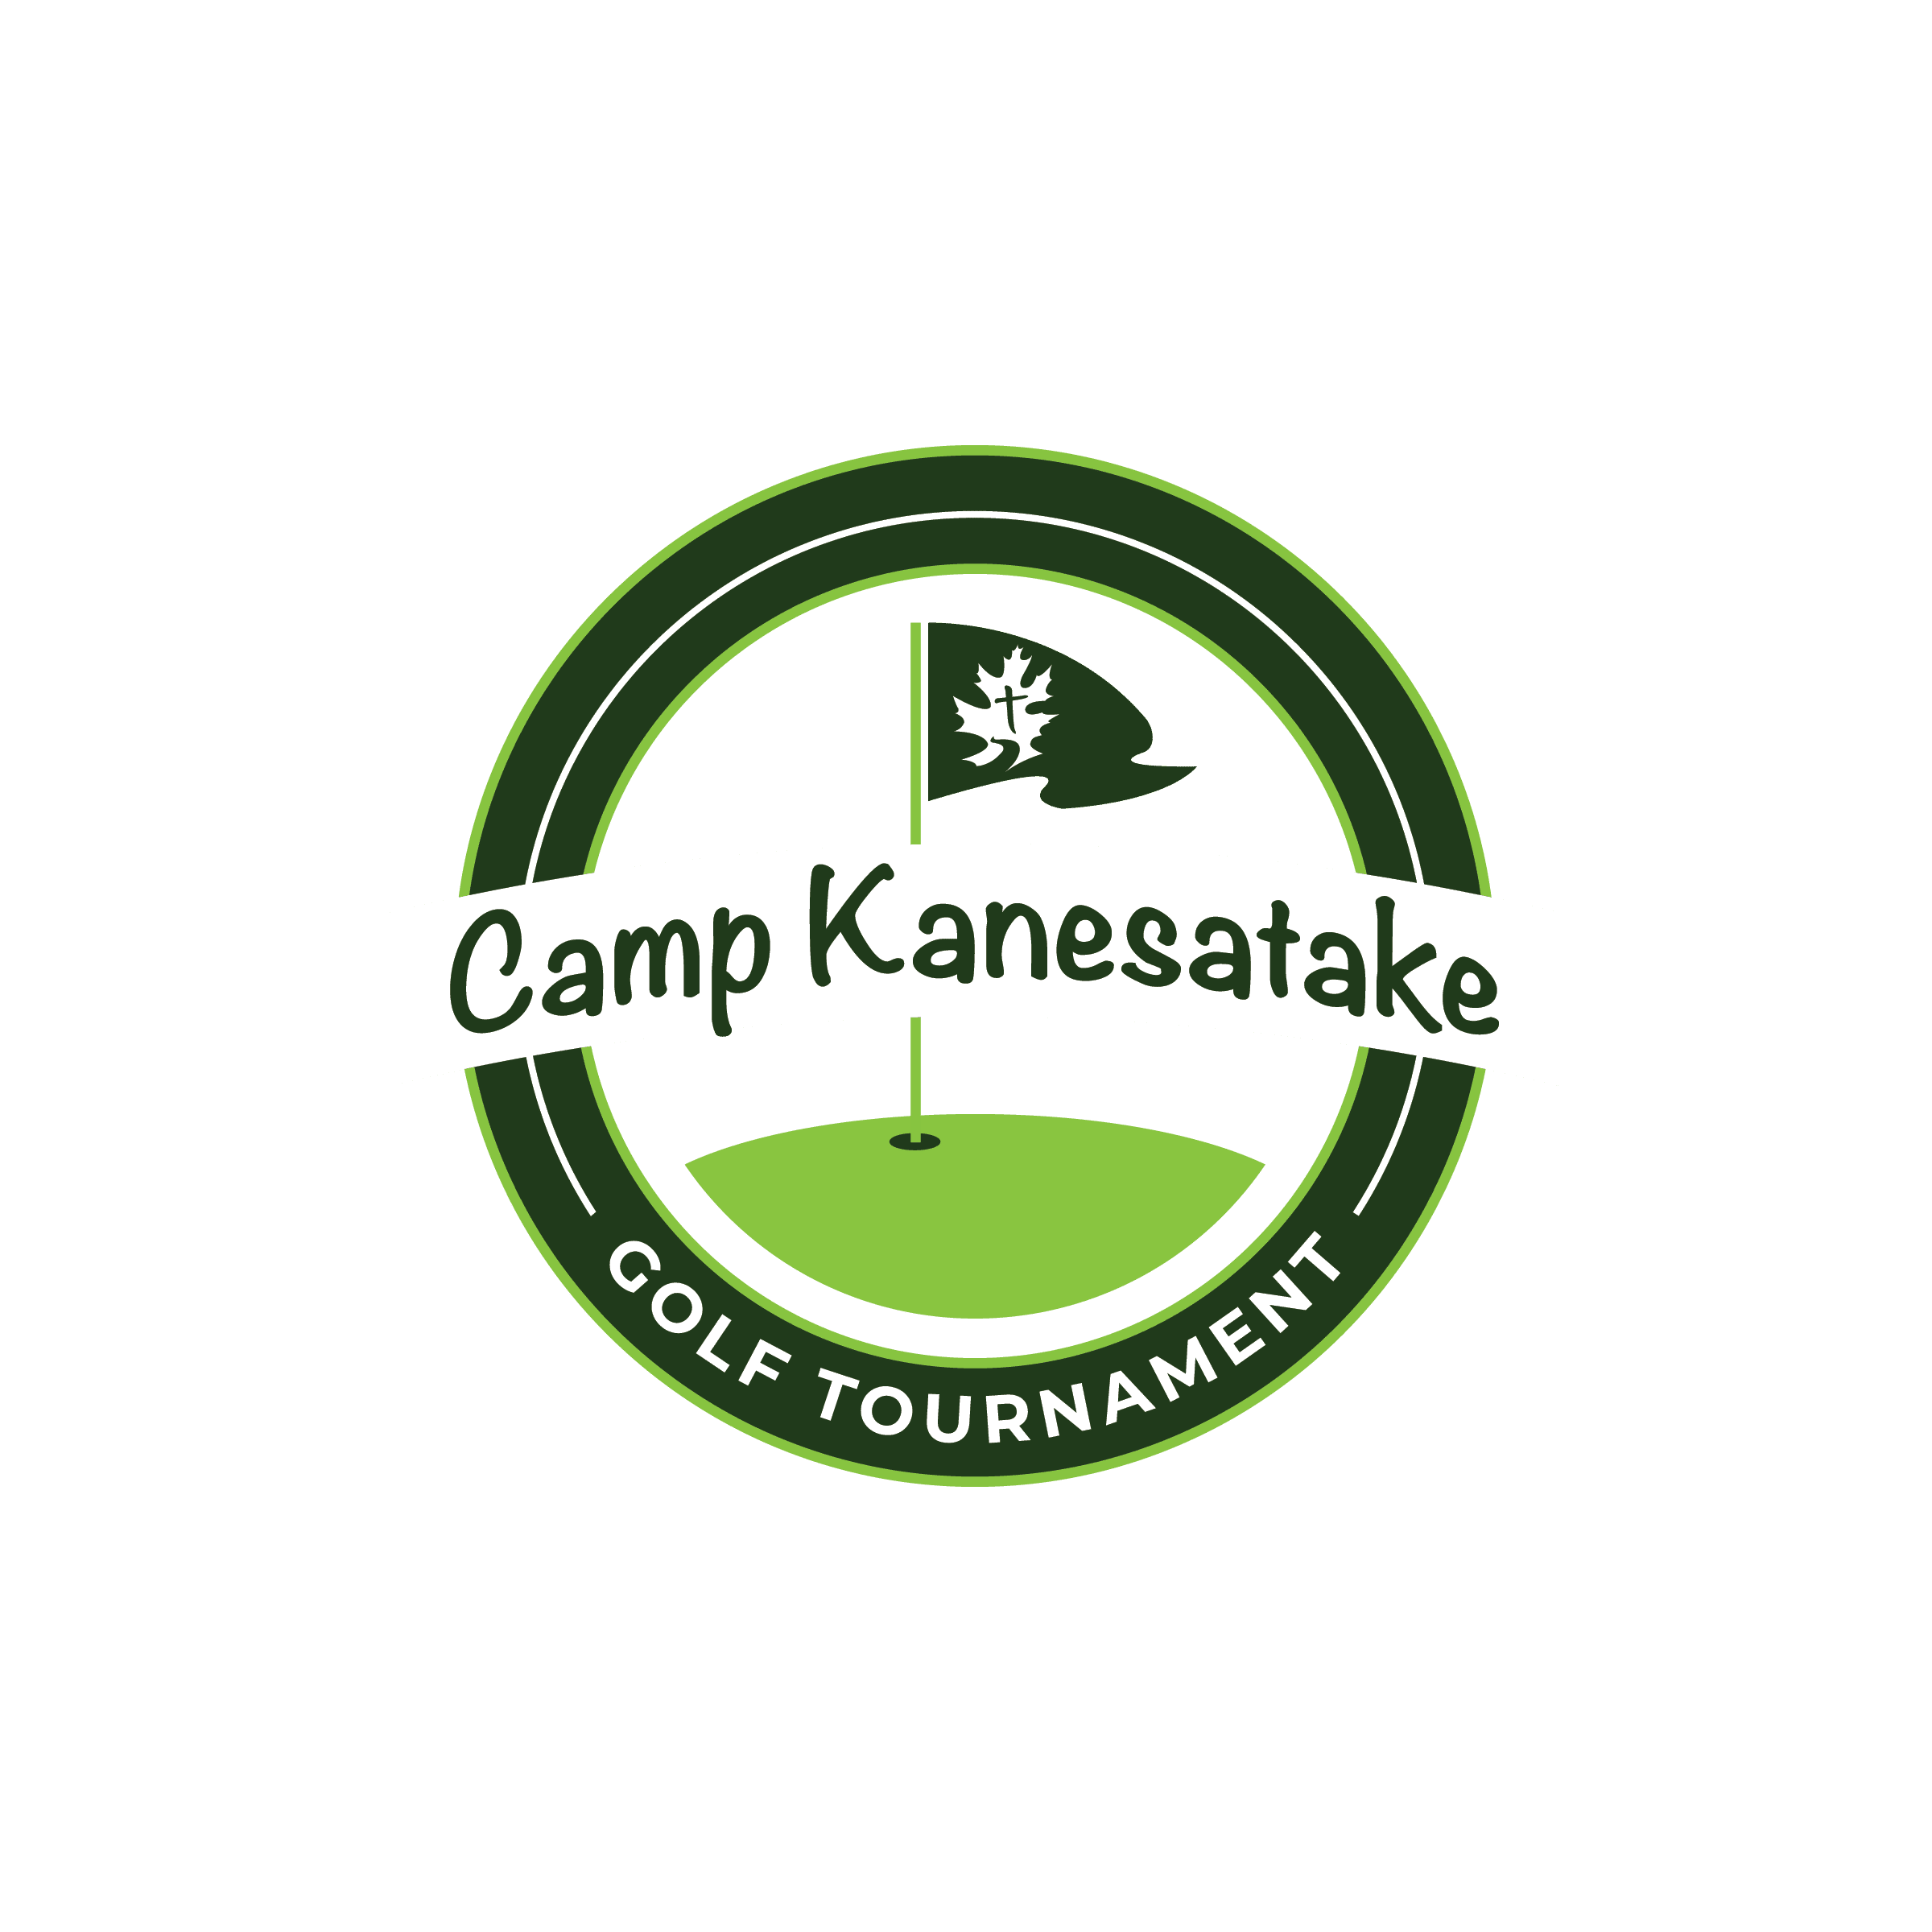 Camp Kanesatake Golf Tournament